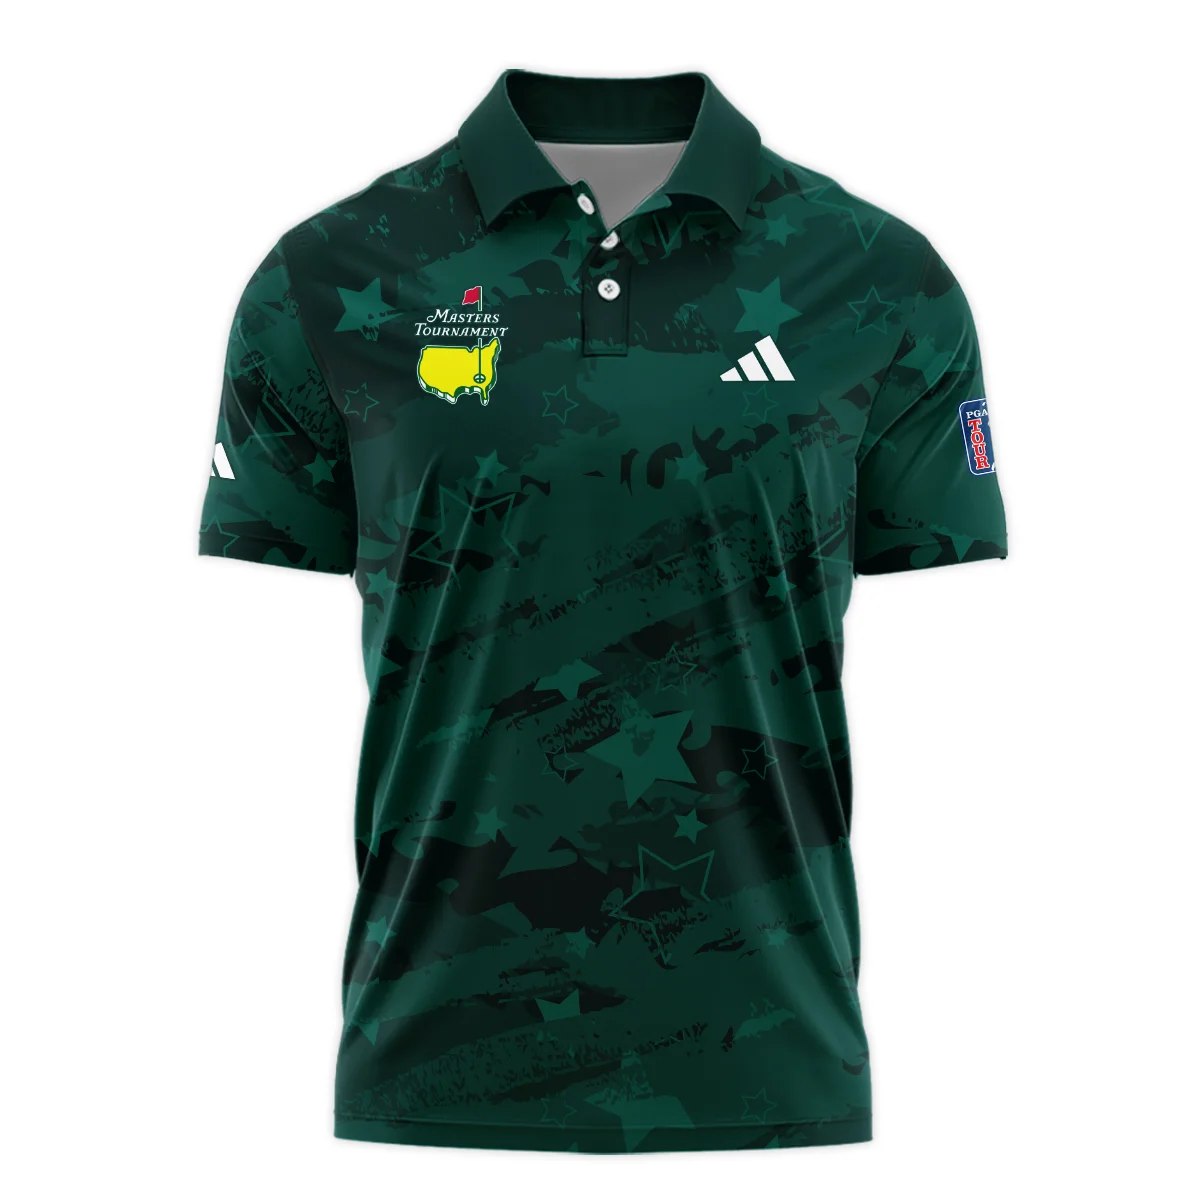 Dark Green Stars Pattern Grunge Background Masters Tournament Adidas Style Classic Quarter Zipped Sweatshirt